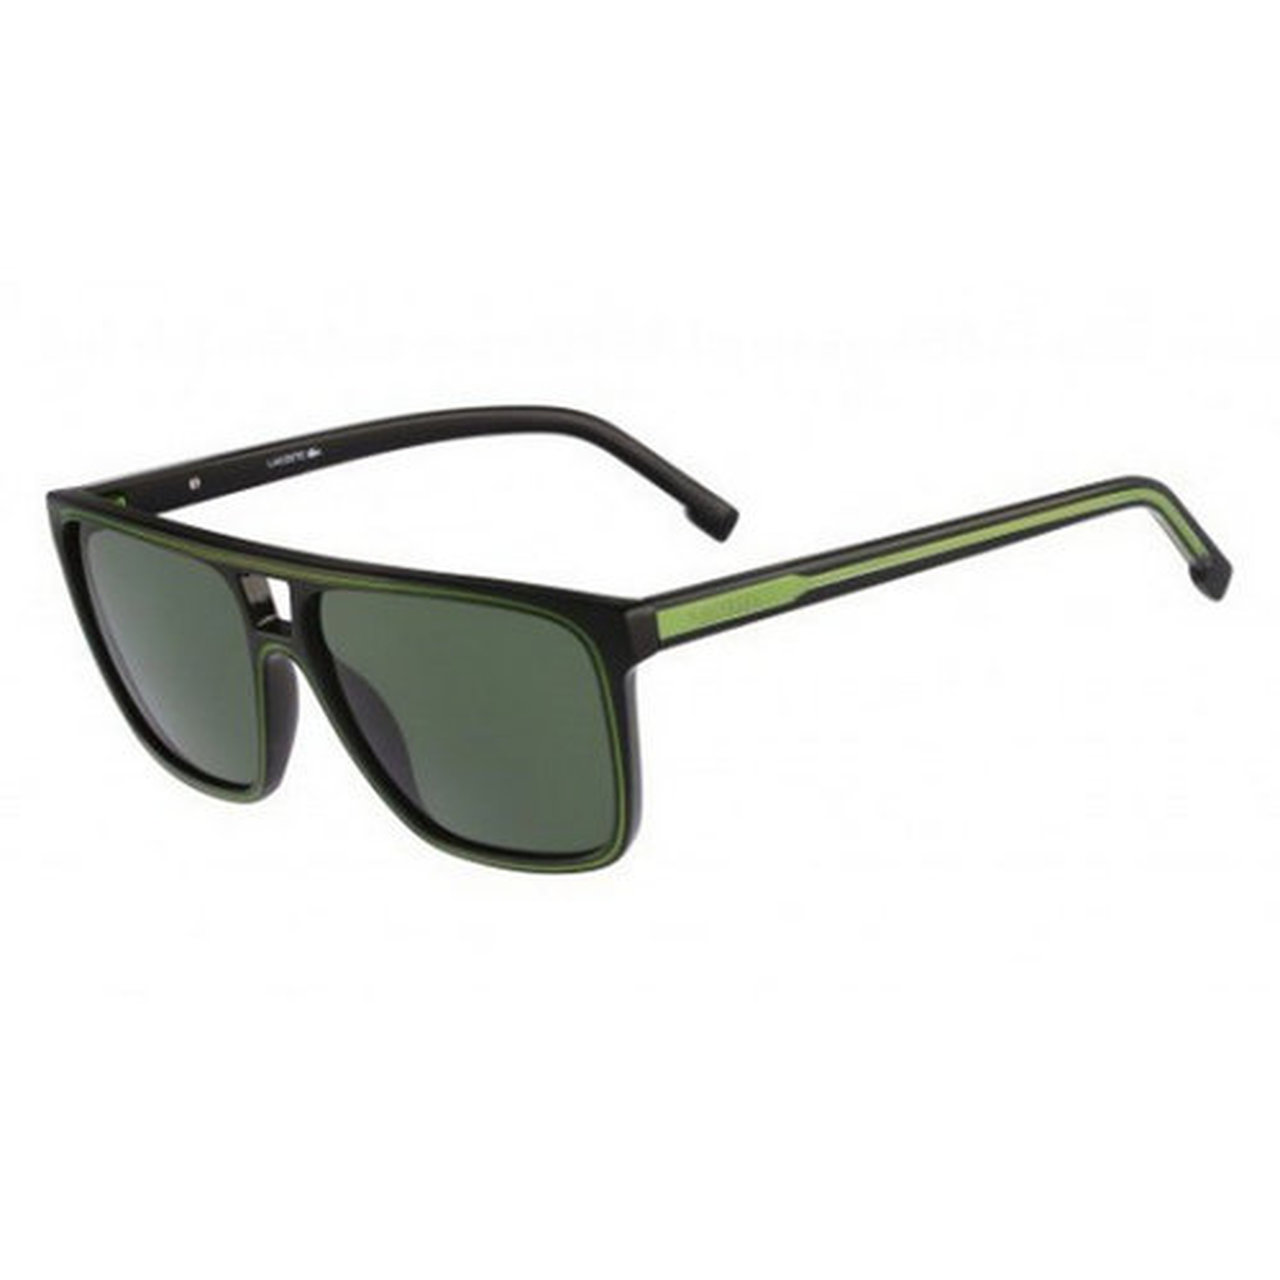 Lacoste L743S-001 Men's Black Aviator Plastic Sunglasses